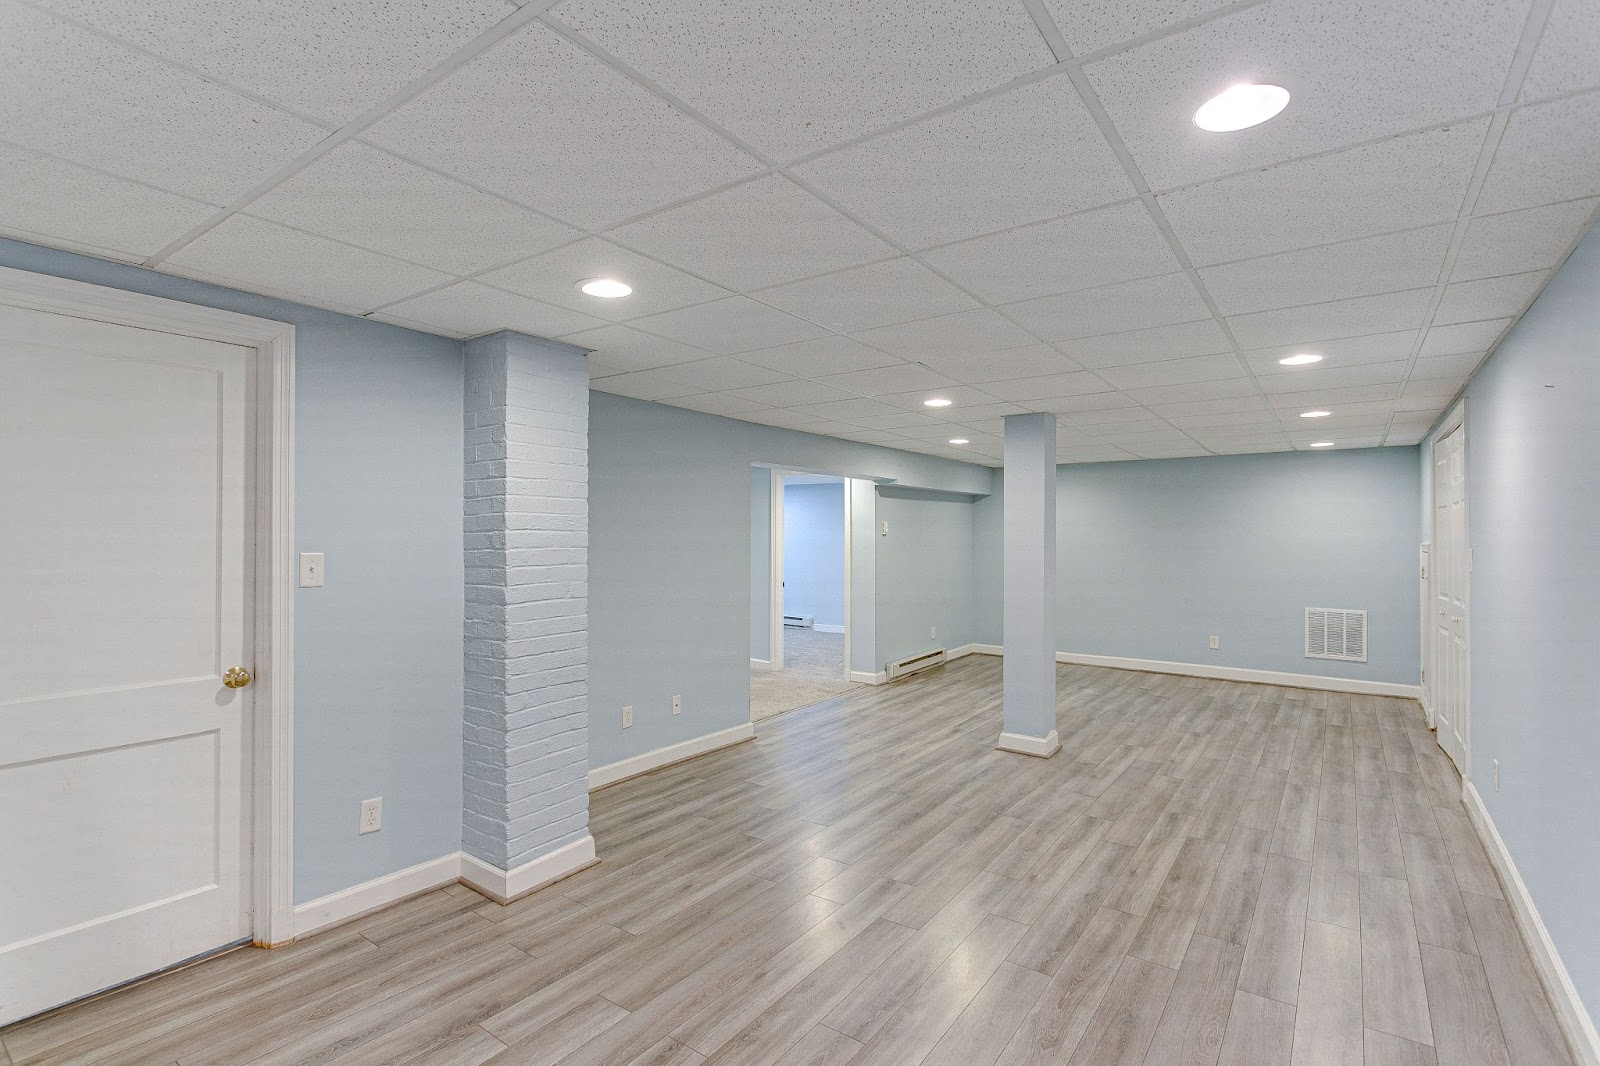 Basement remodeling in Brooklyn, NY showcasing various flooring options including laminate flooring